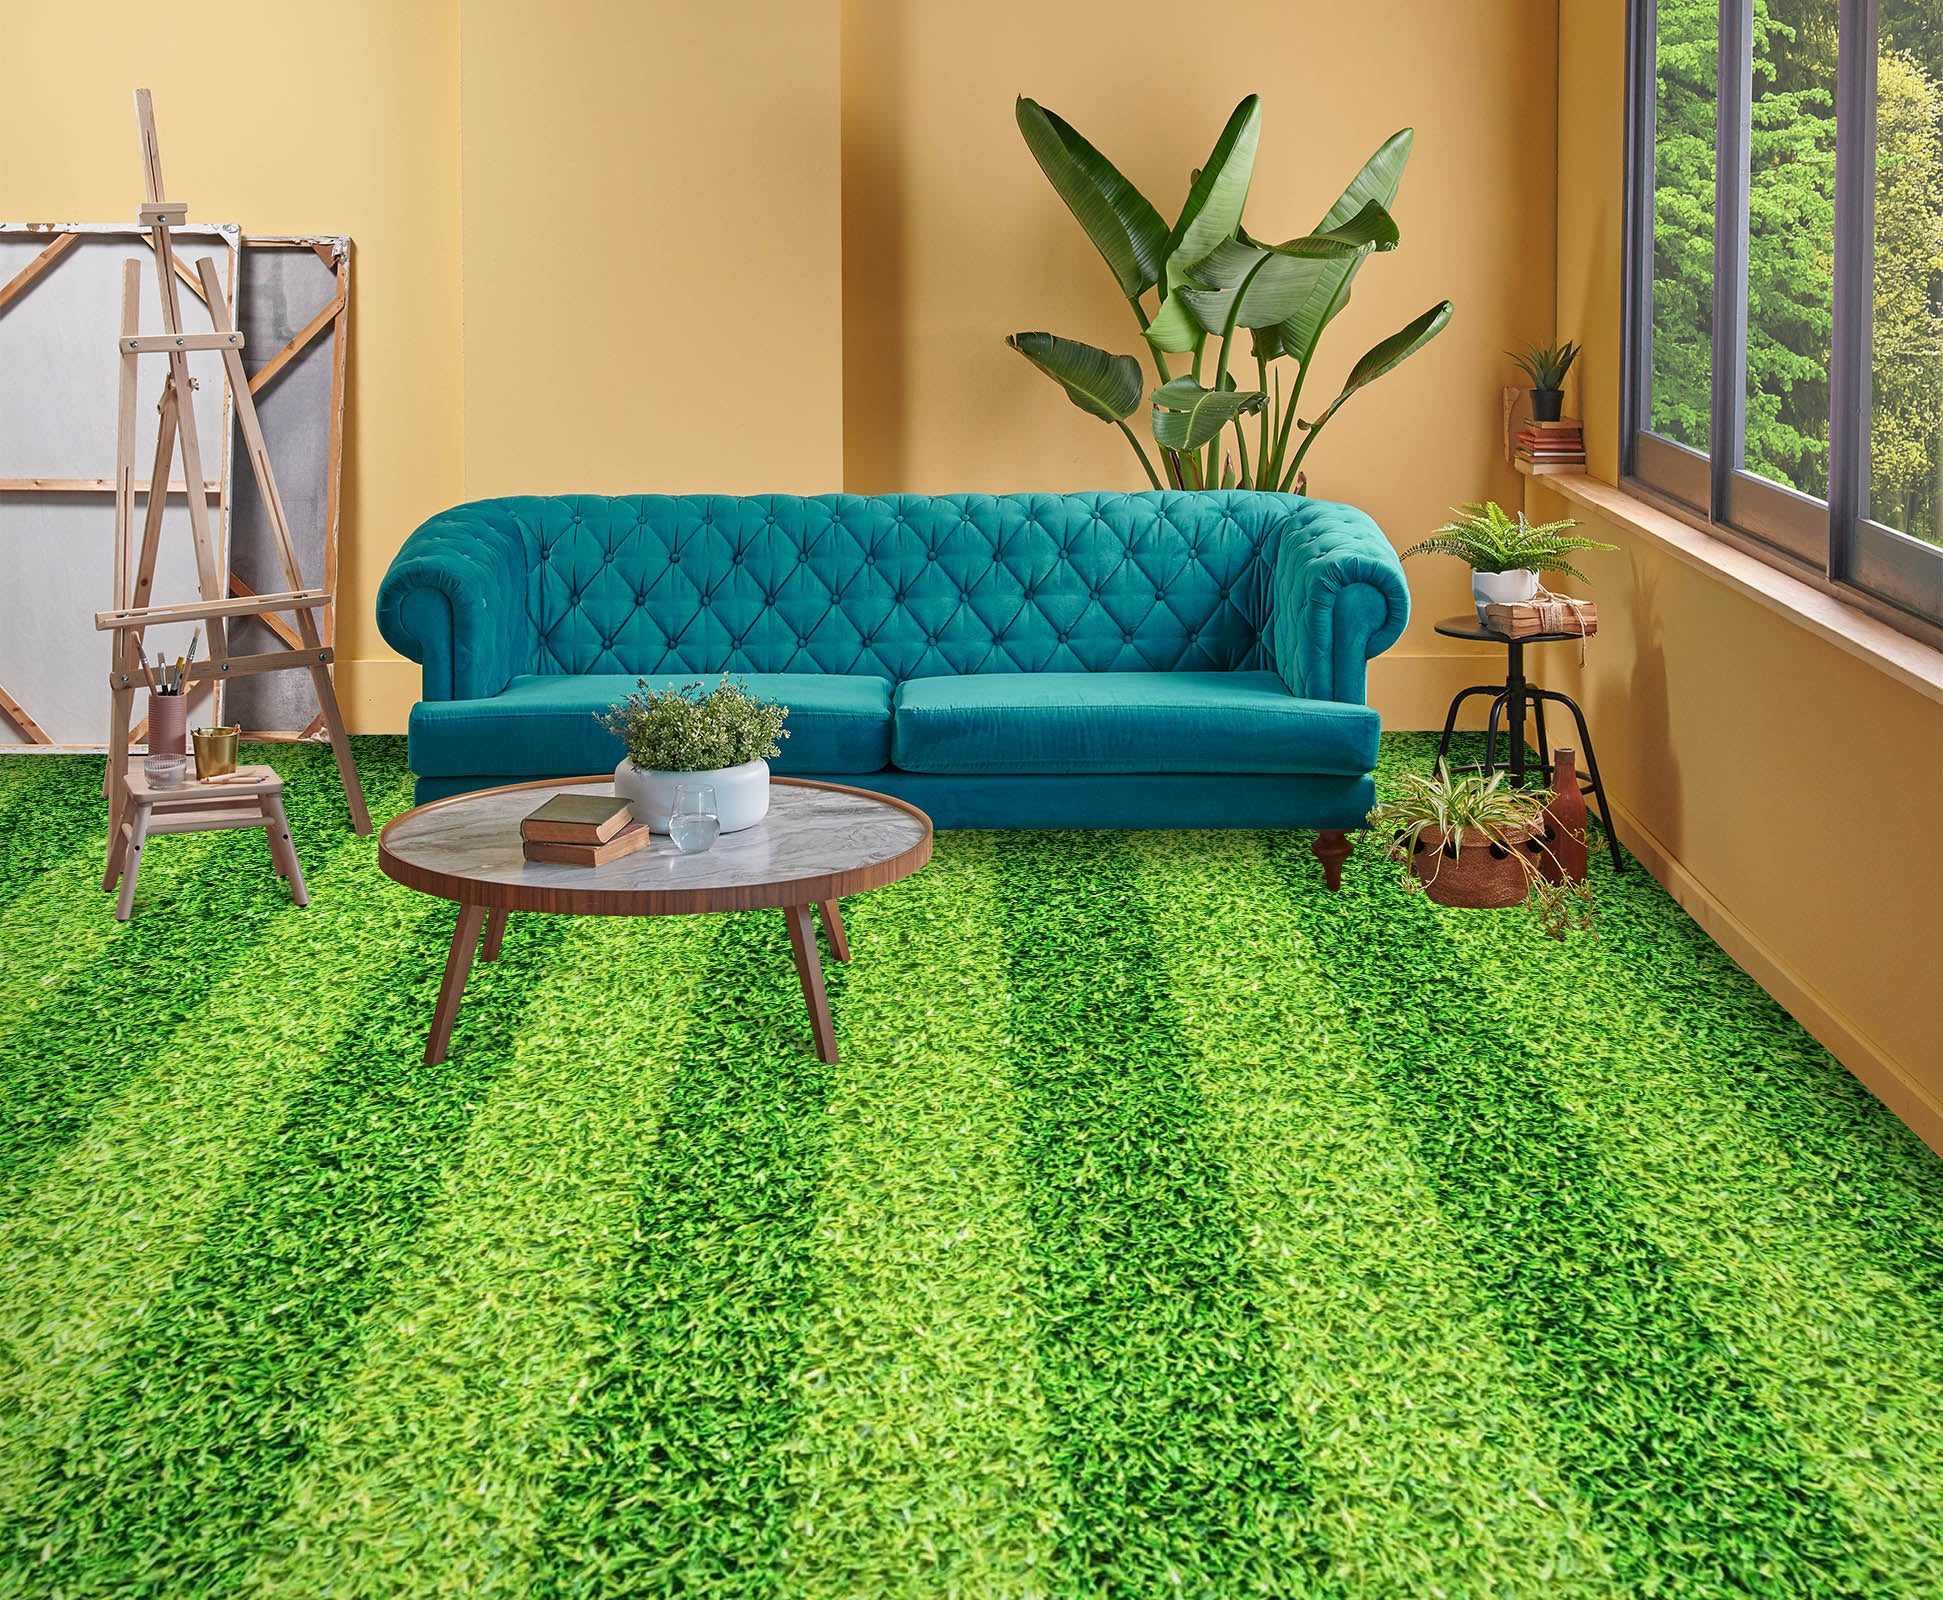 3D Comfortable Green Grass 1378 Floor Mural  Wallpaper Murals Self-Adhesive Removable Print Epoxy